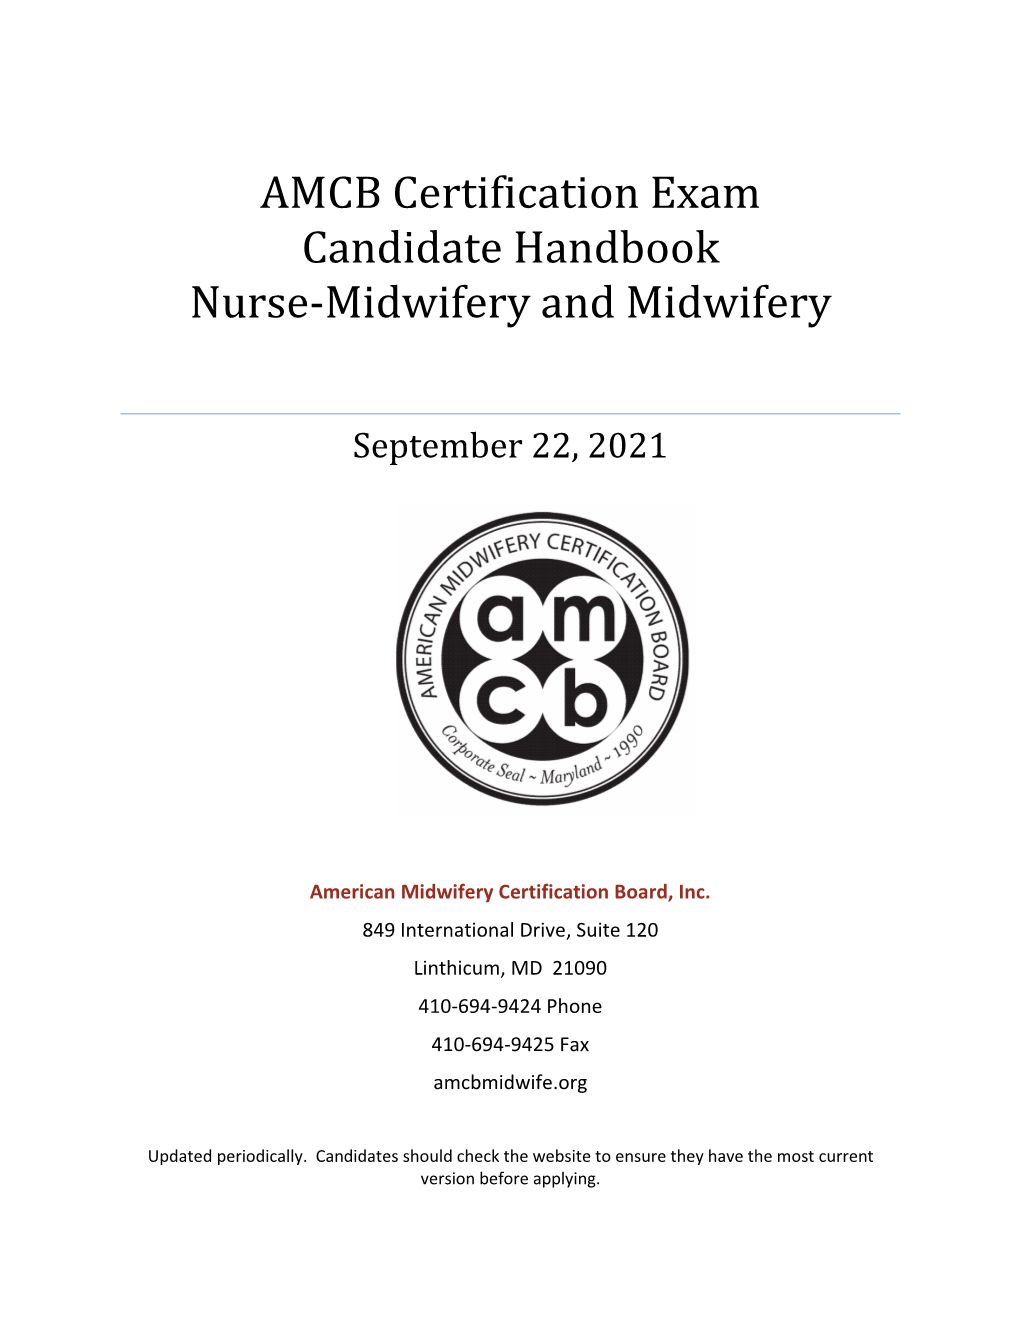 AMCB Certification Exam Candidate Handbook Nurse-Midwifery and Midwifery